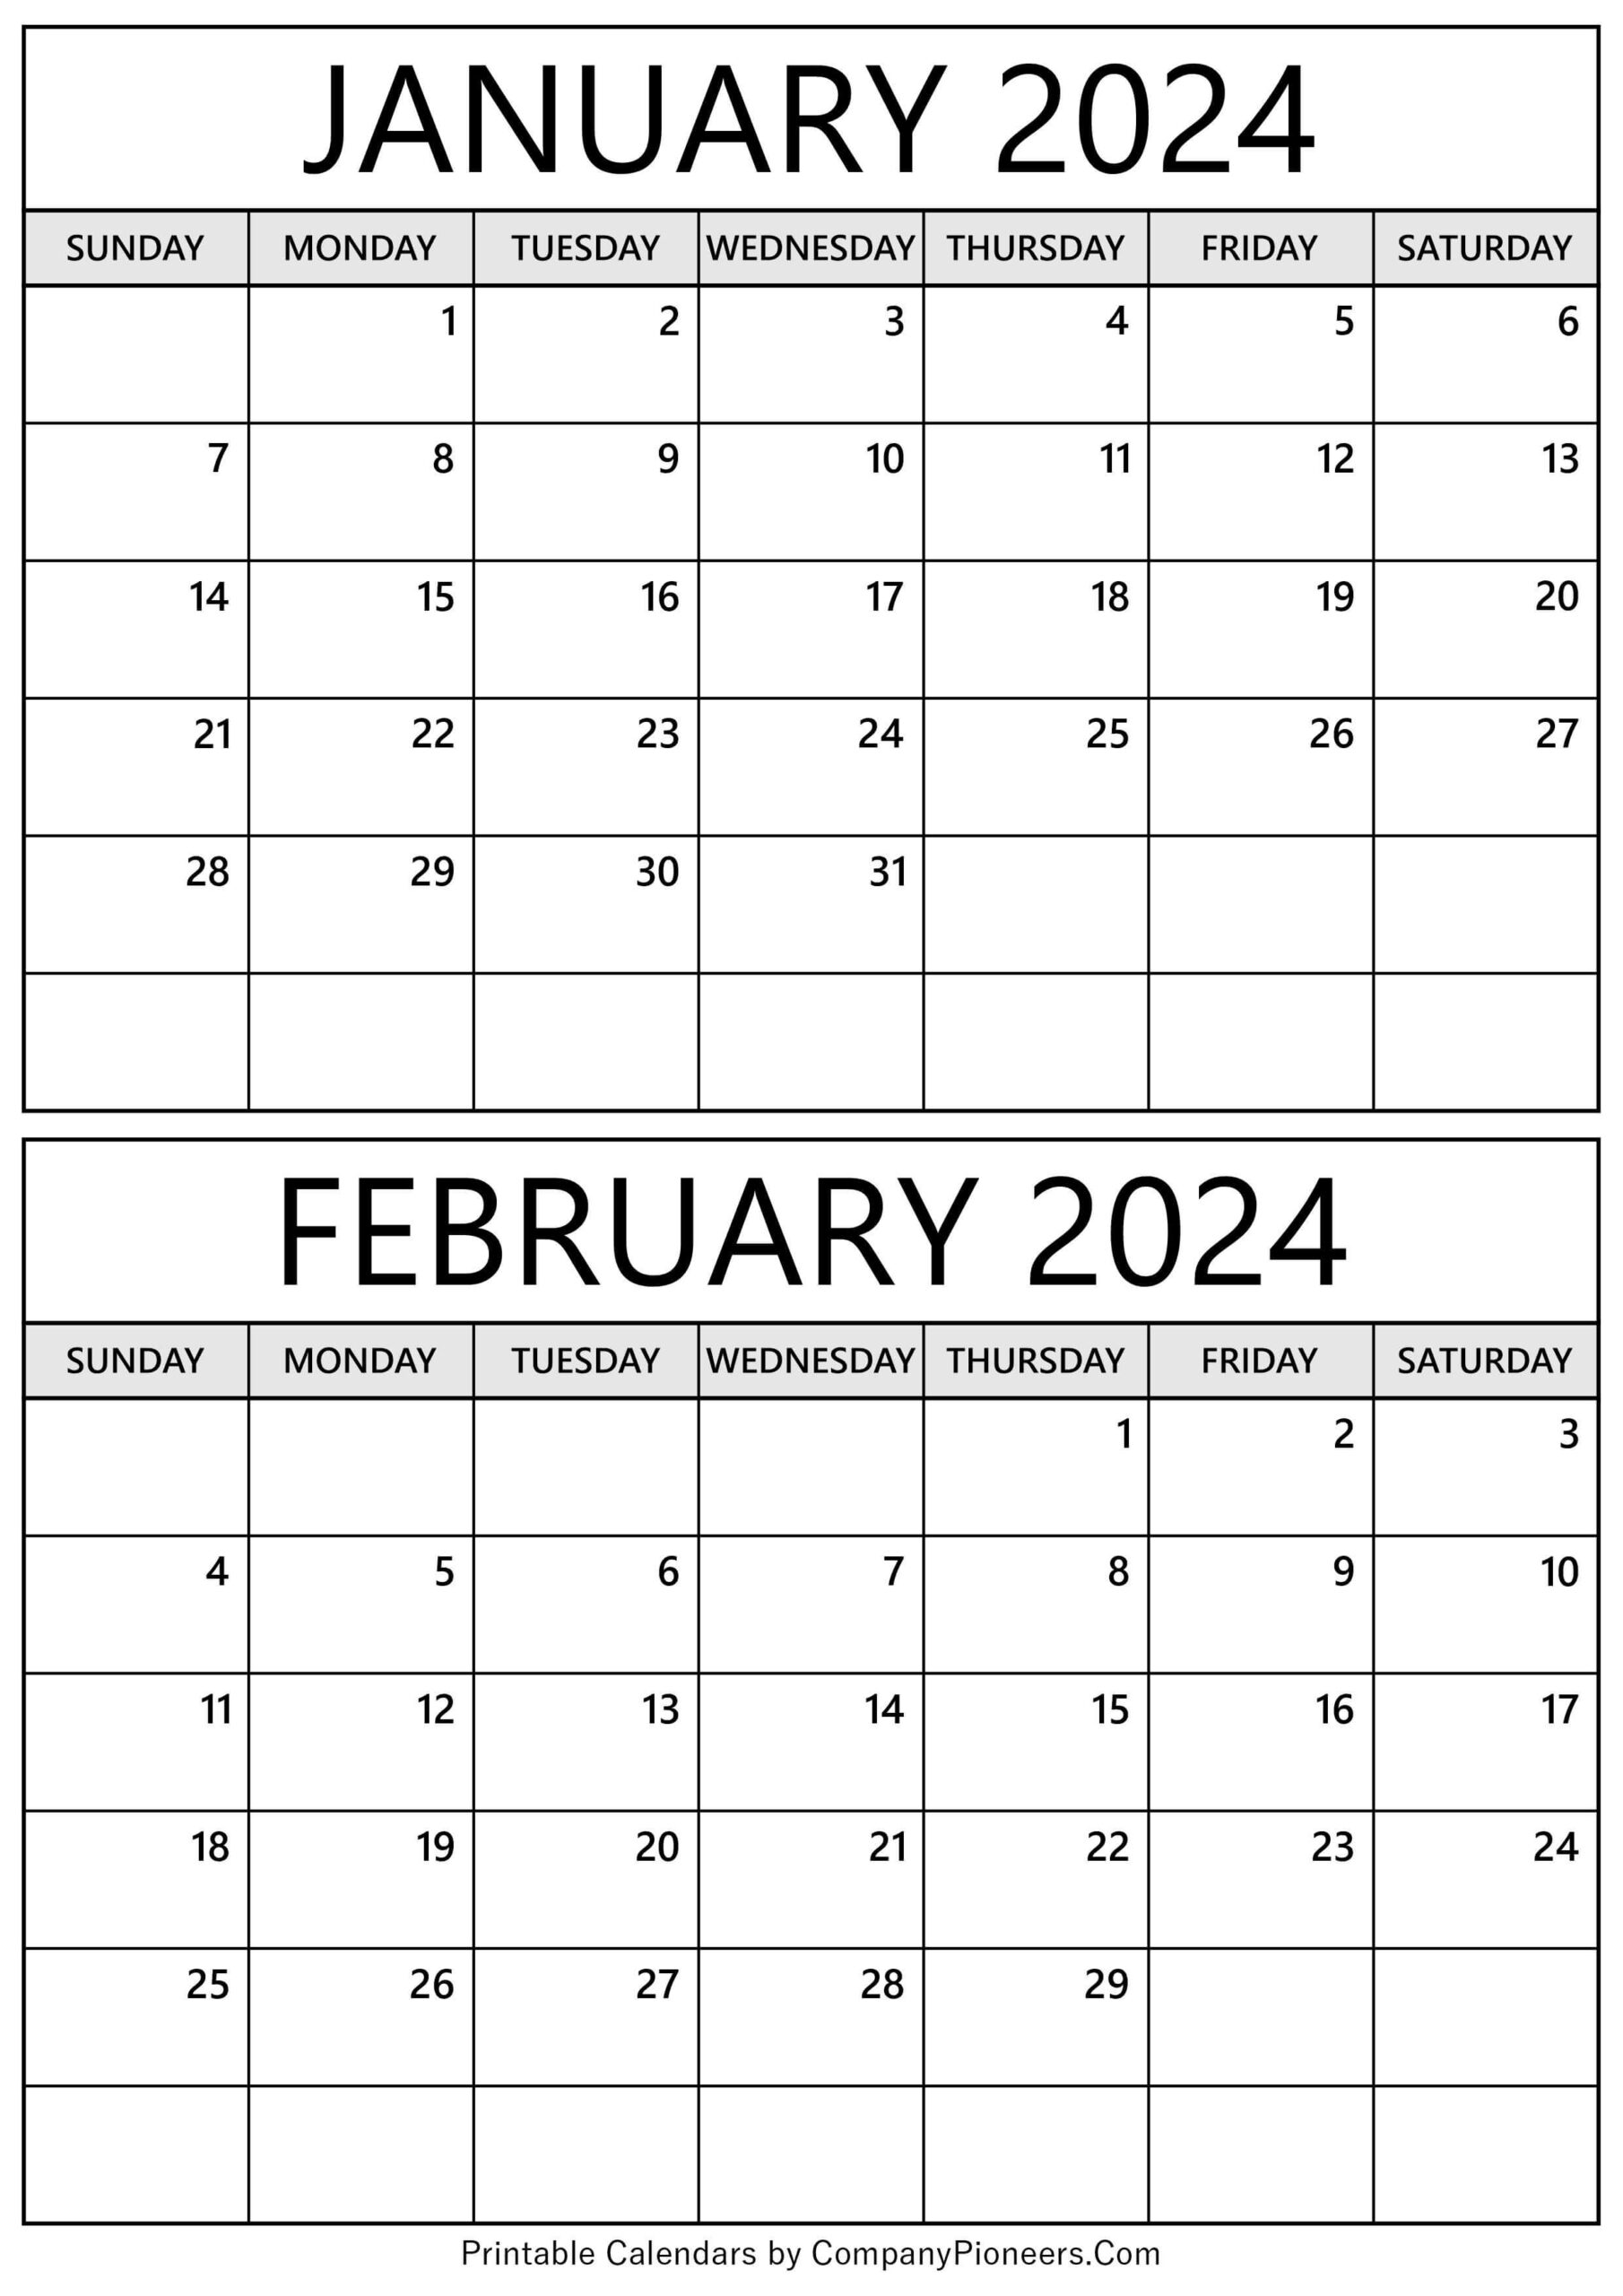 January February 2024 Calendar Printable - Template for January February 2024 Calendar Printable